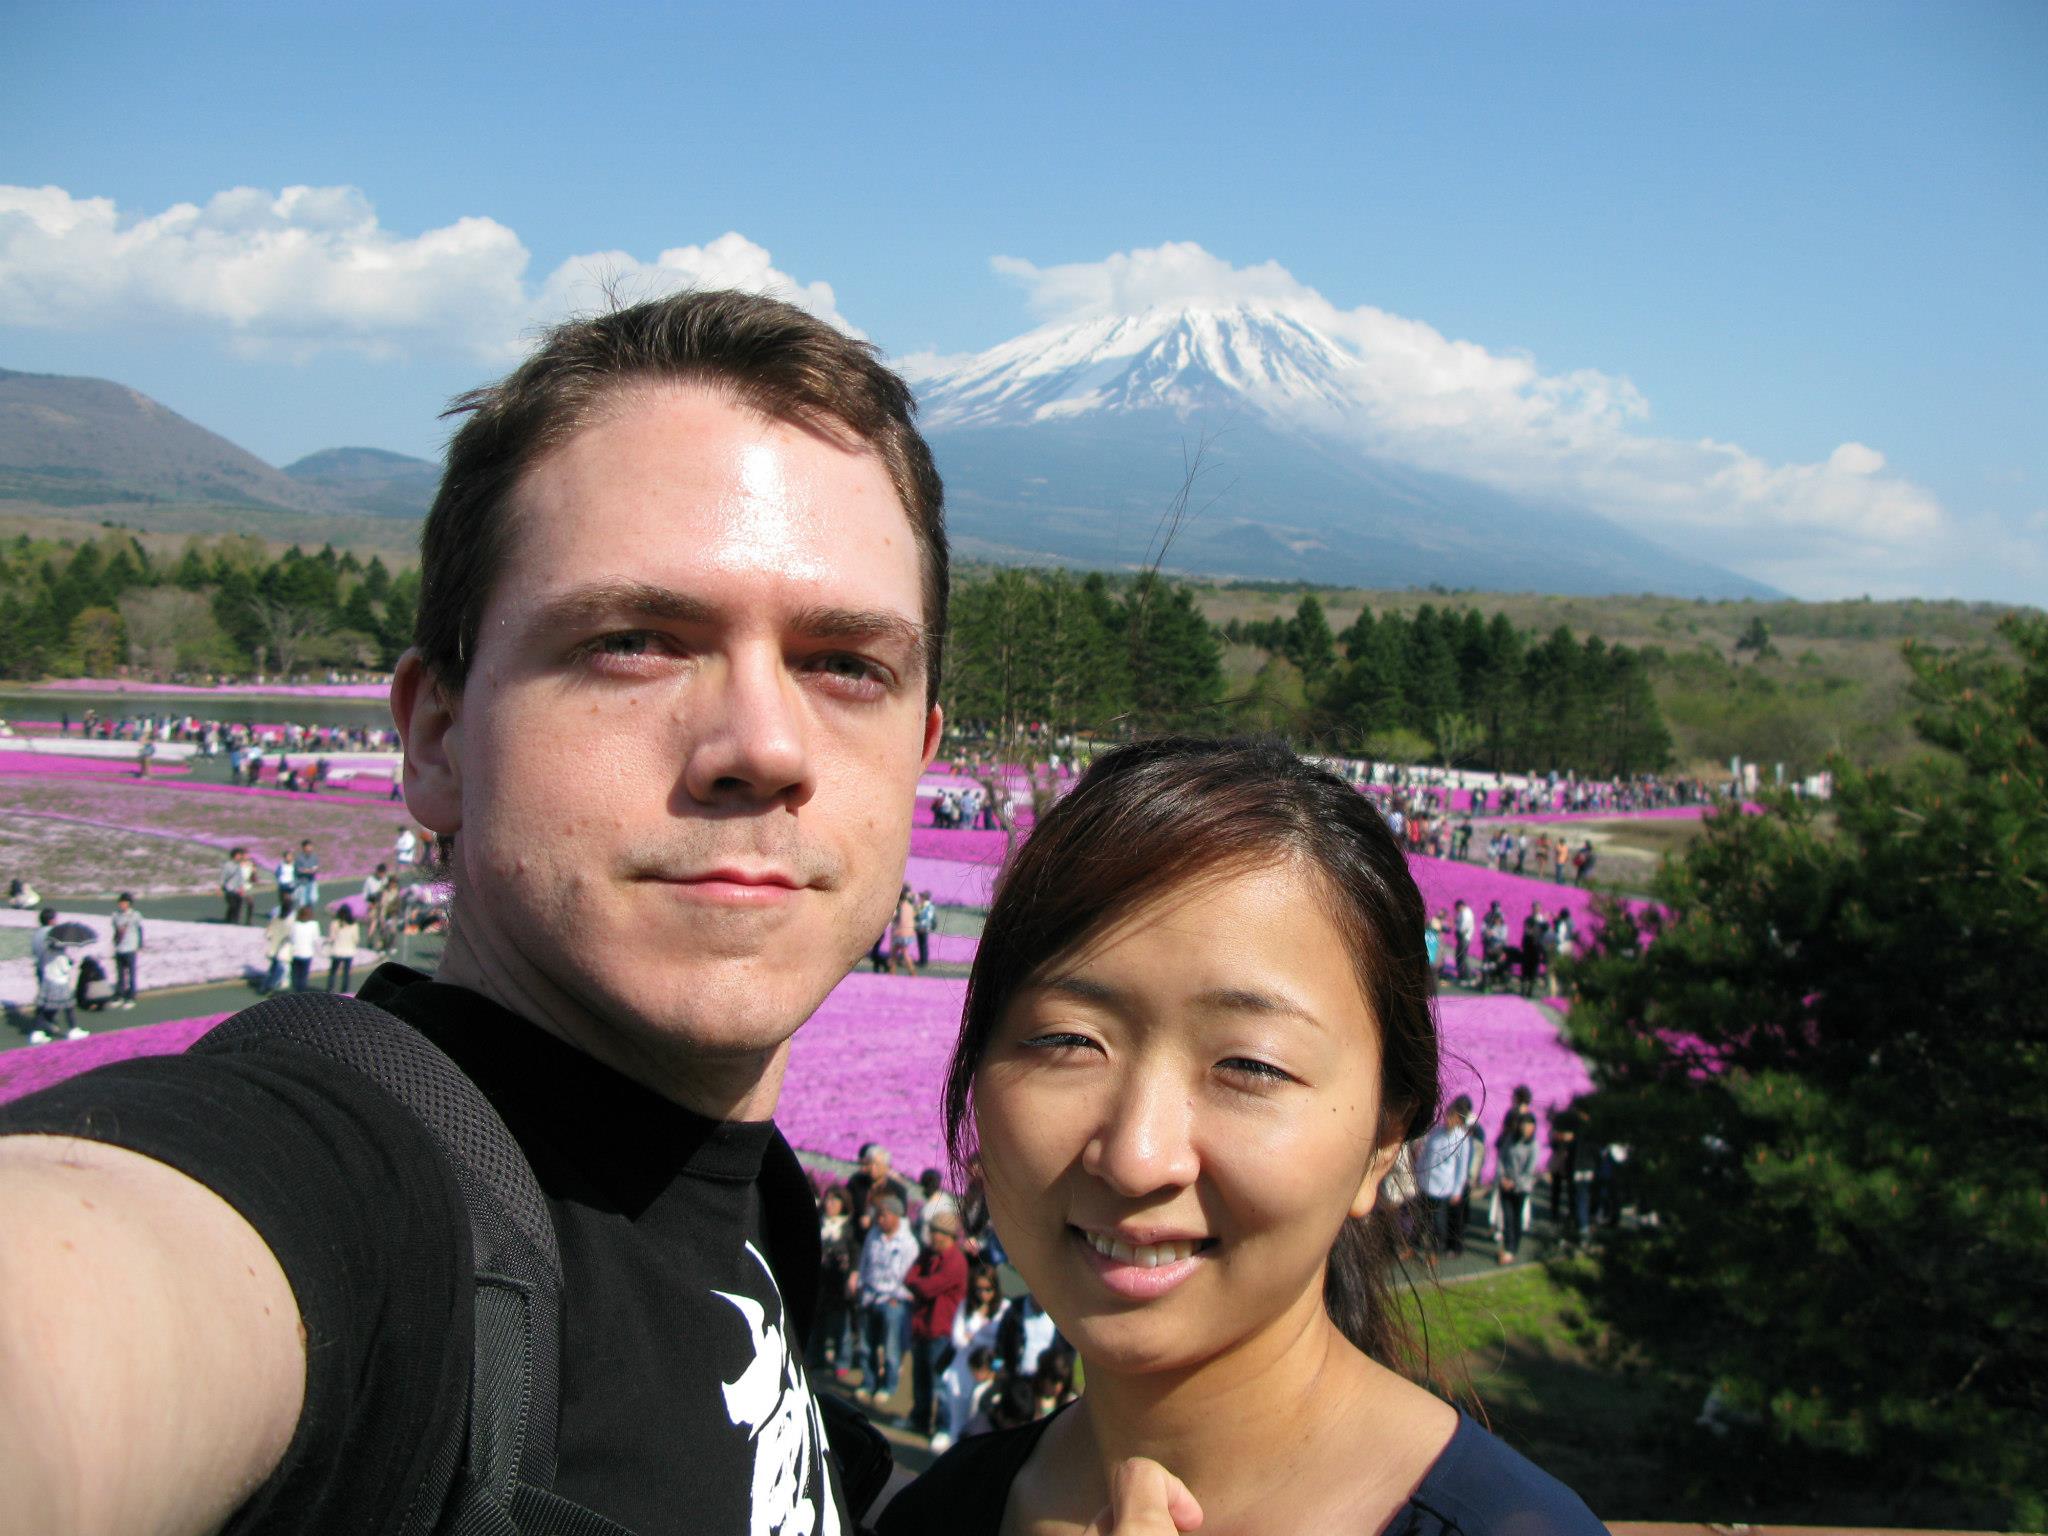 Akiko & I with Fuji in the background